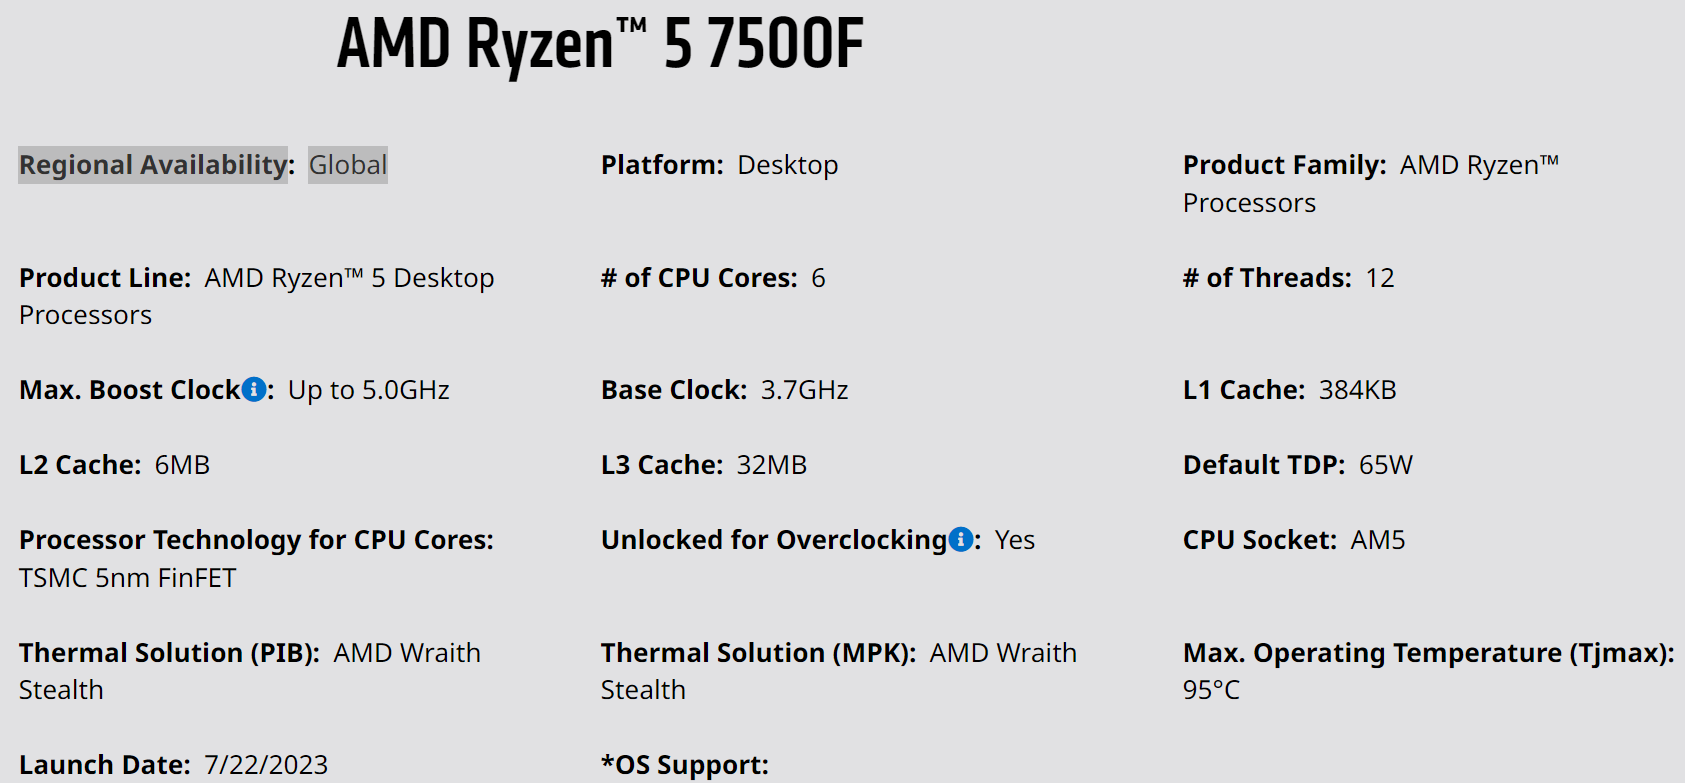 AMD Ryzen 5 7500F iGPU-less Processor Launched For $179